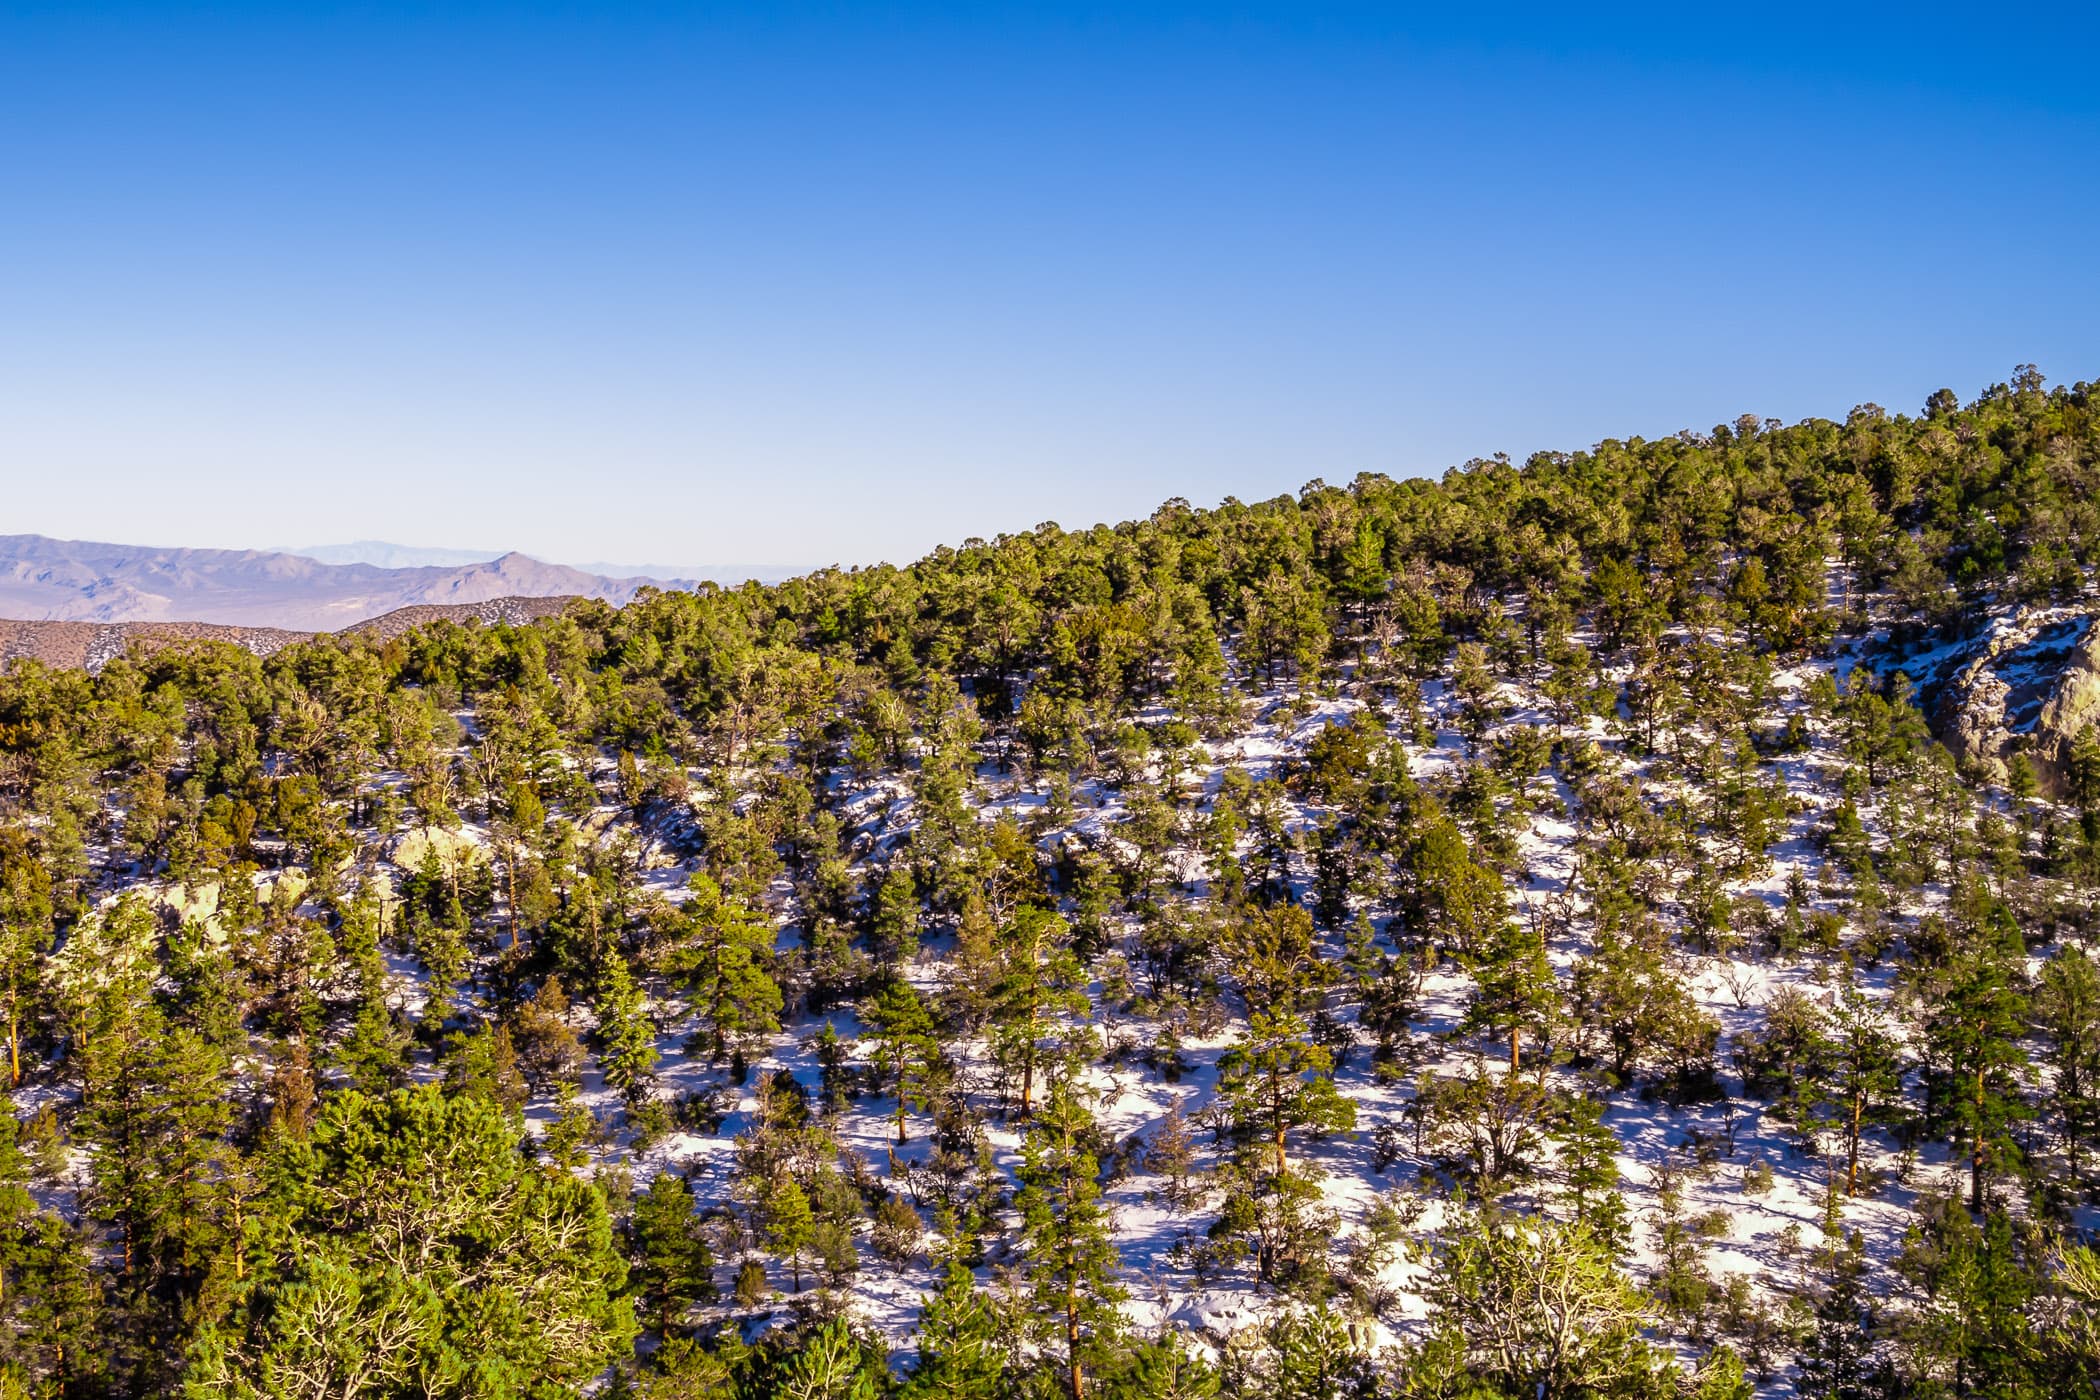 Evergreen trees grow in the wintry foothills of Nevada's Mount Charleston, near Las Vegas.